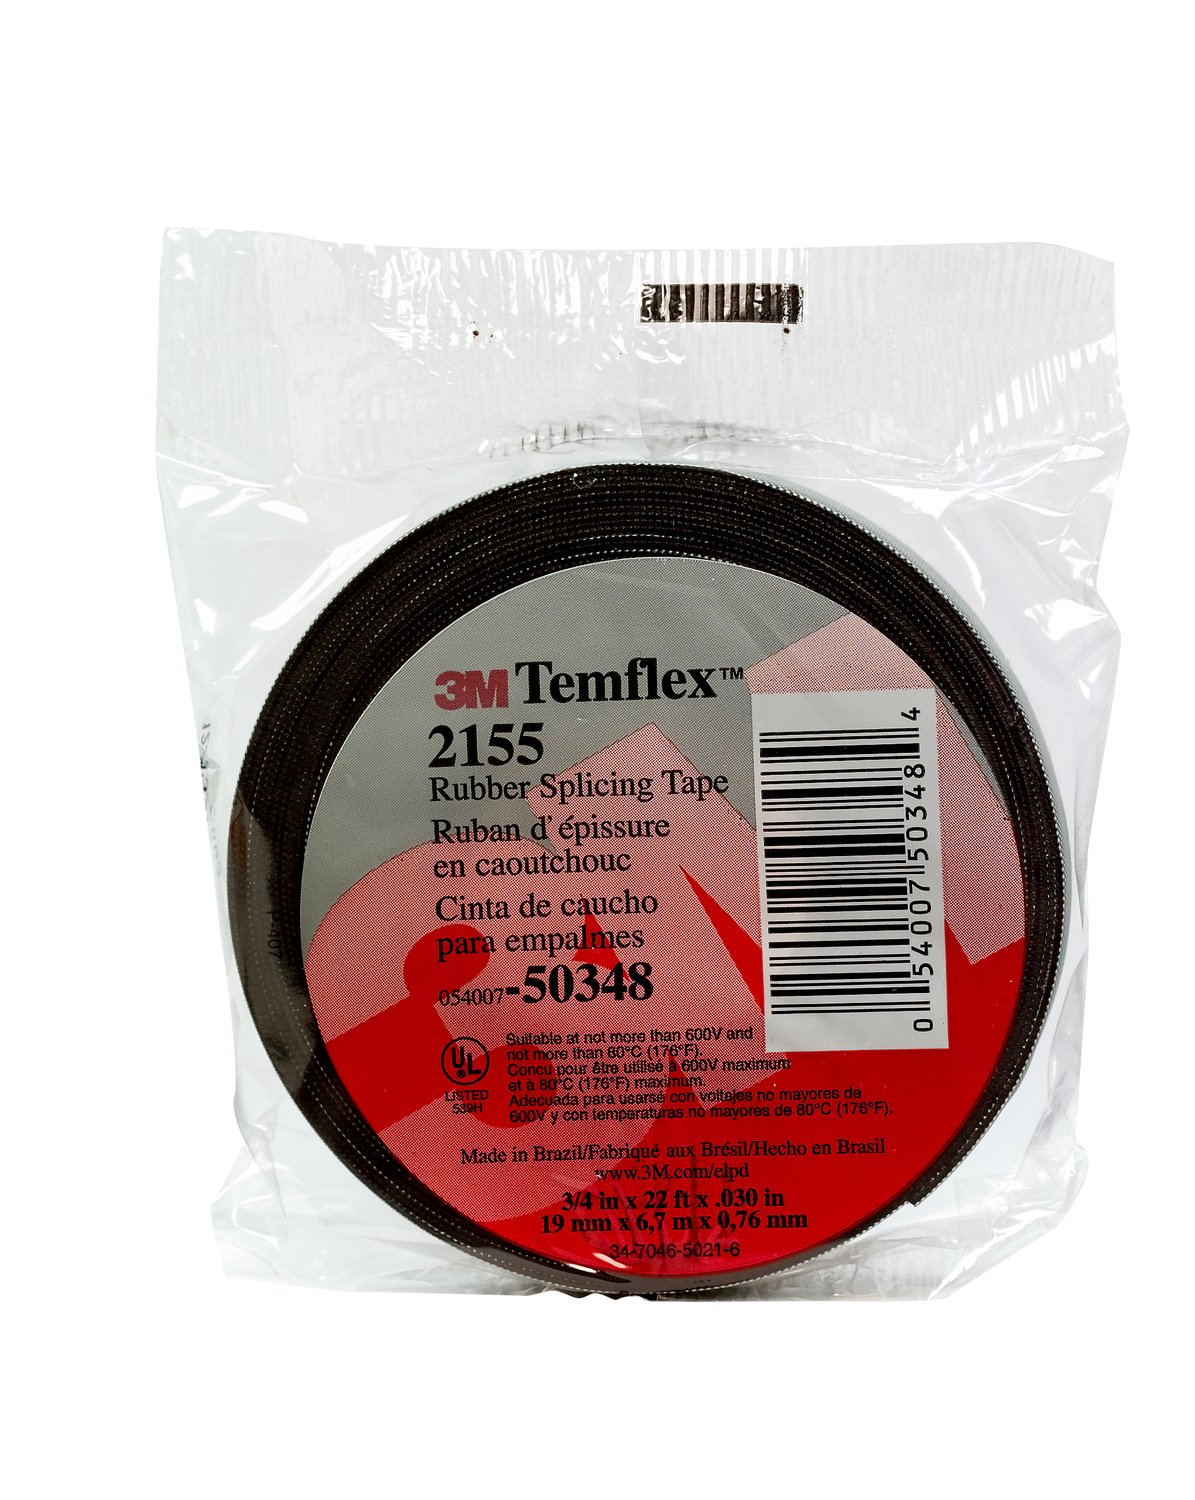 7000089970 - 3M Temflex Rubber Splicing Tape 2155, 3/4 in x 22 ft, Black, 20
rolls/Case